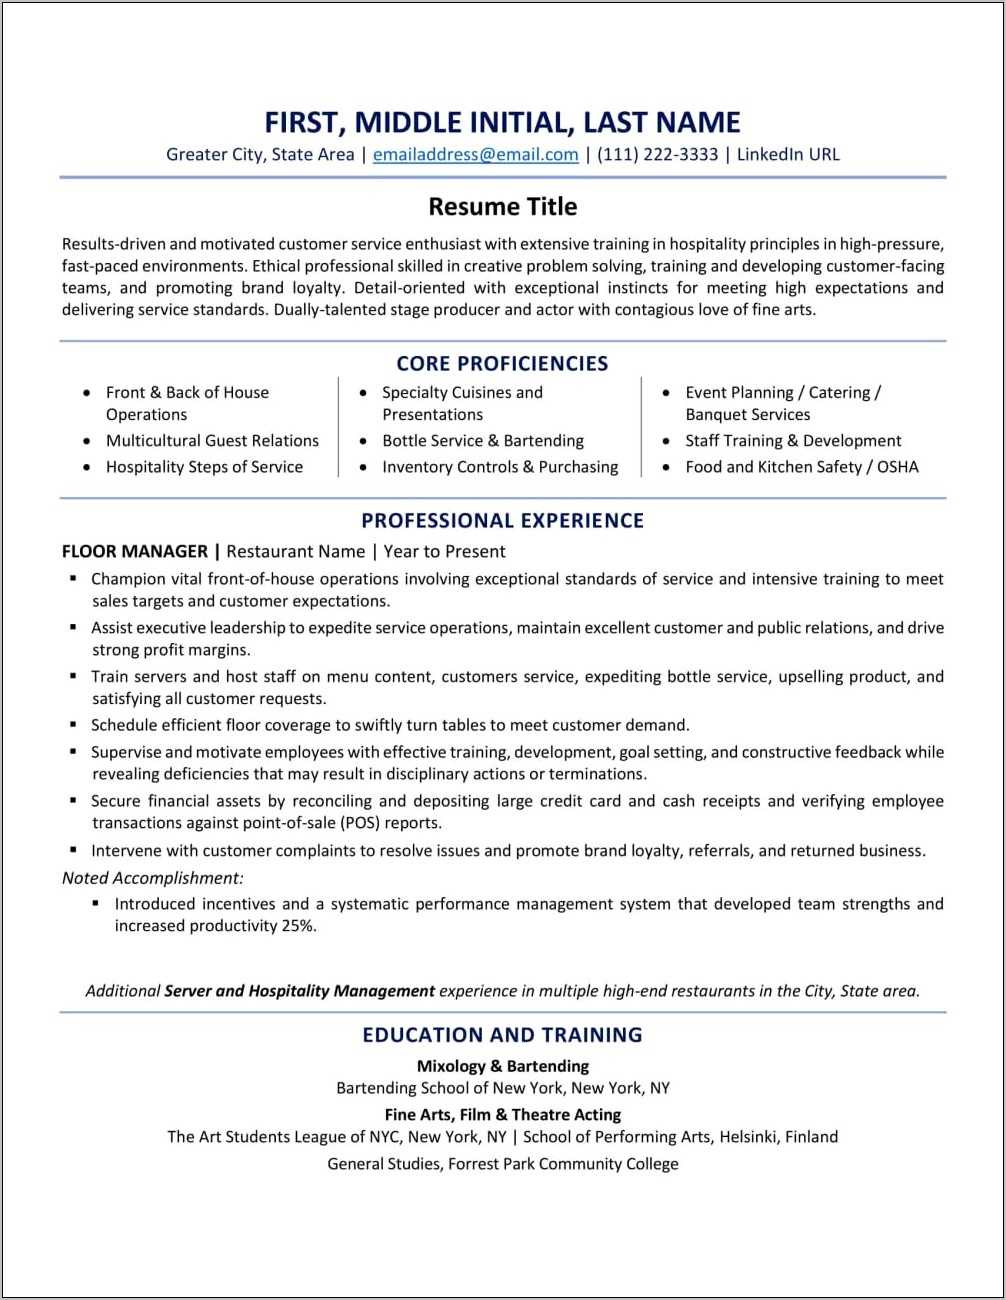 Sample Resume For Hr Opportunity In Us Workforce